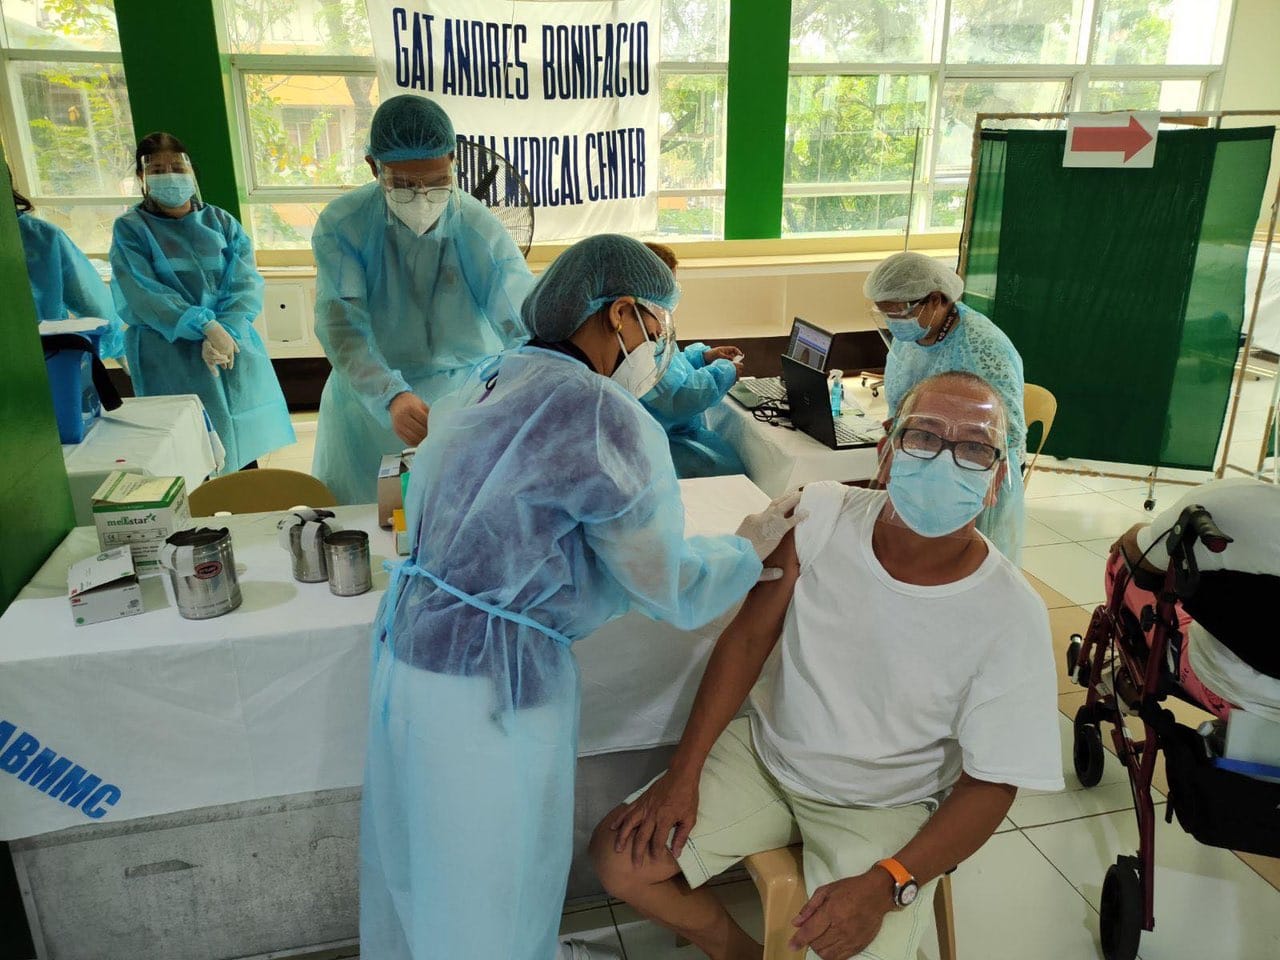 Seniors on dialysis treatment at Manila City hospital get COVID-19 shot